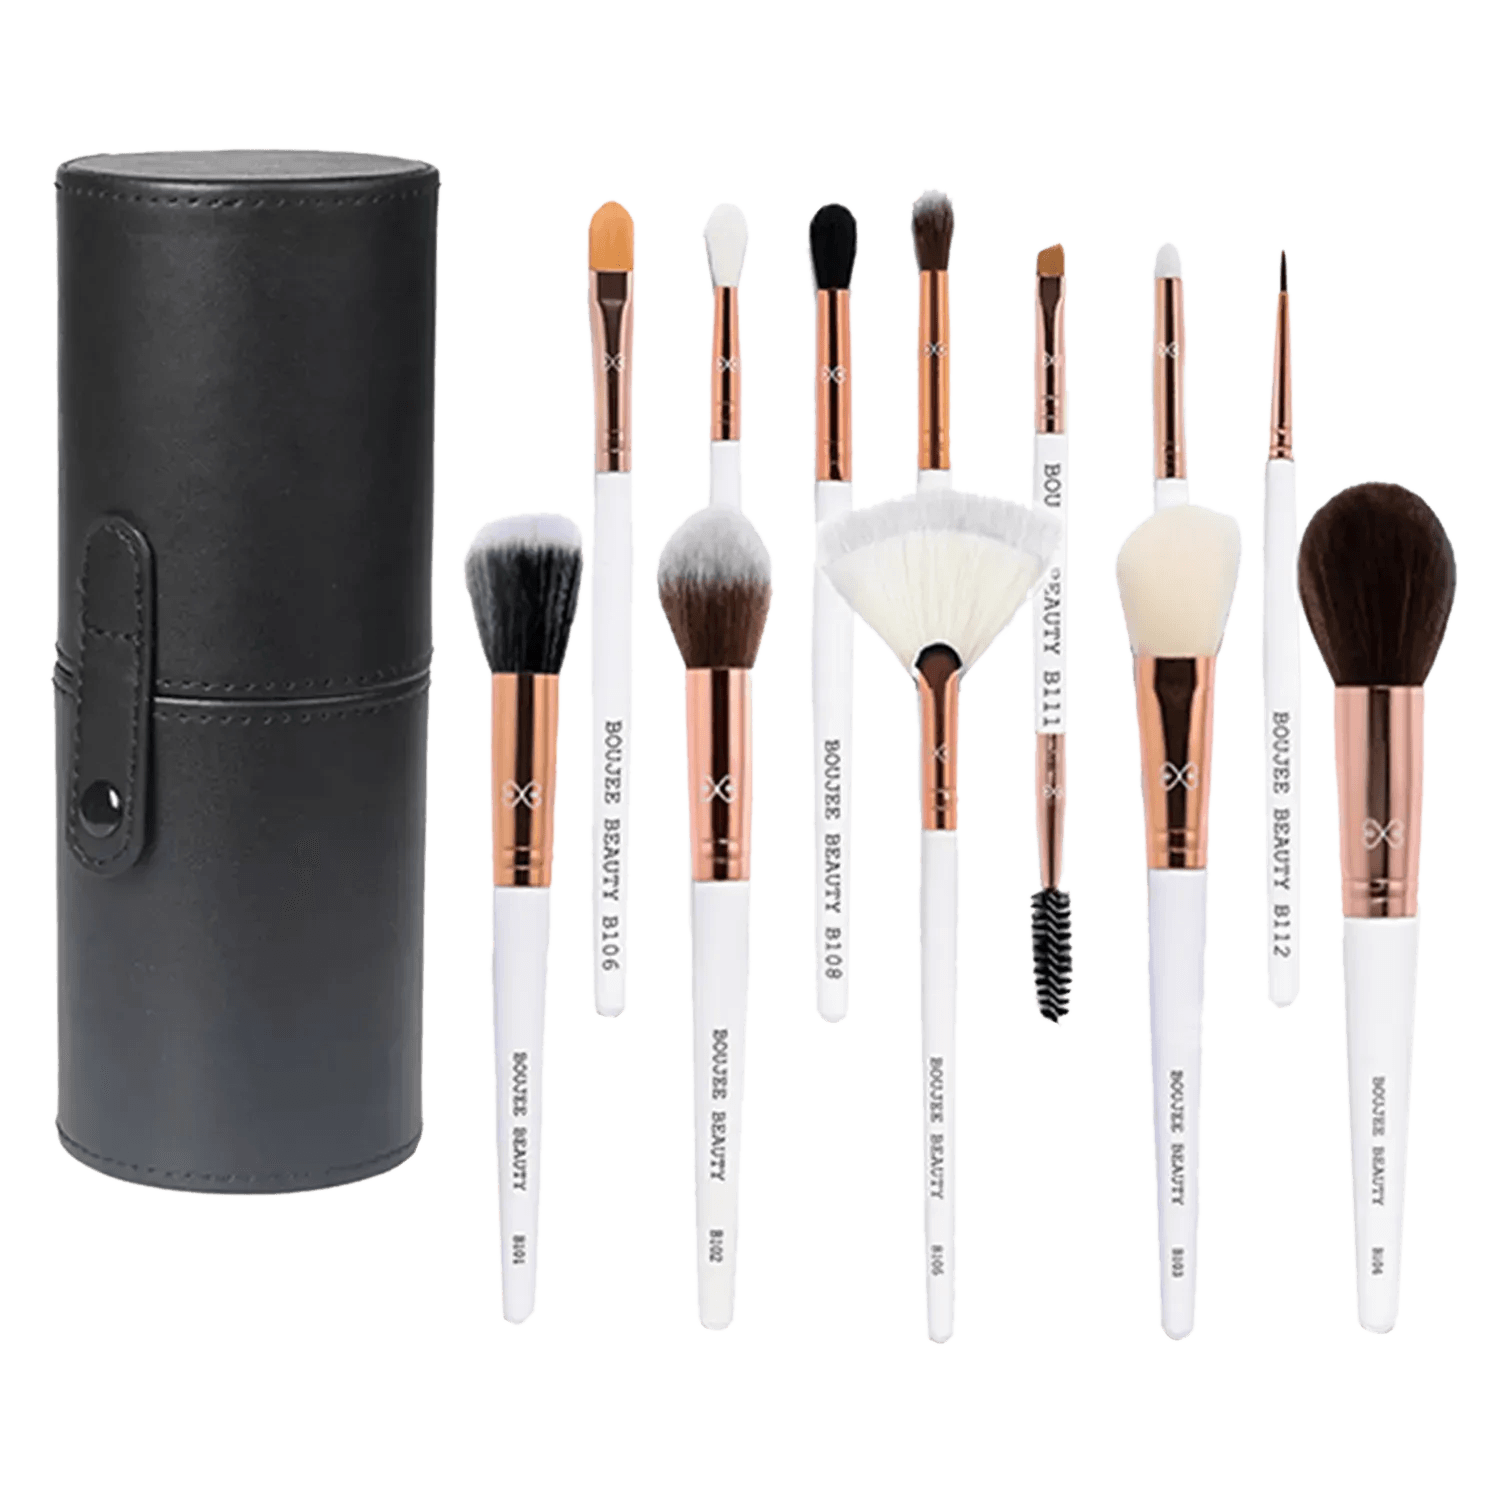 Boujee Beauty Professional Brush Set With Travel Case - S104 (12 Pcs)